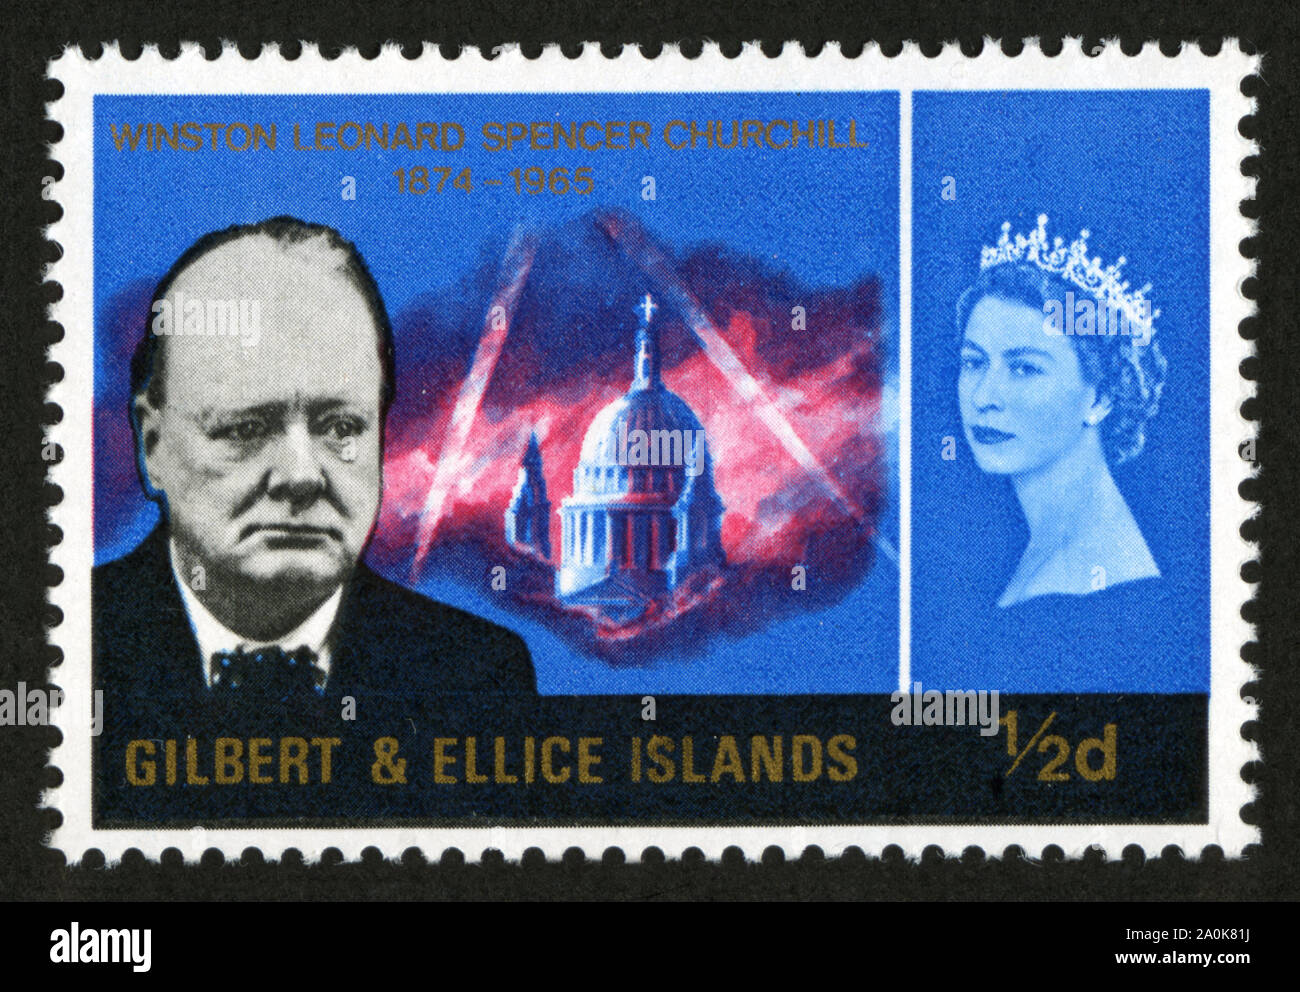 Impresión de sello en las Islas Gilbert y Ellice,Sir Winston Leonard Spencer-Churchill, Foto de stock